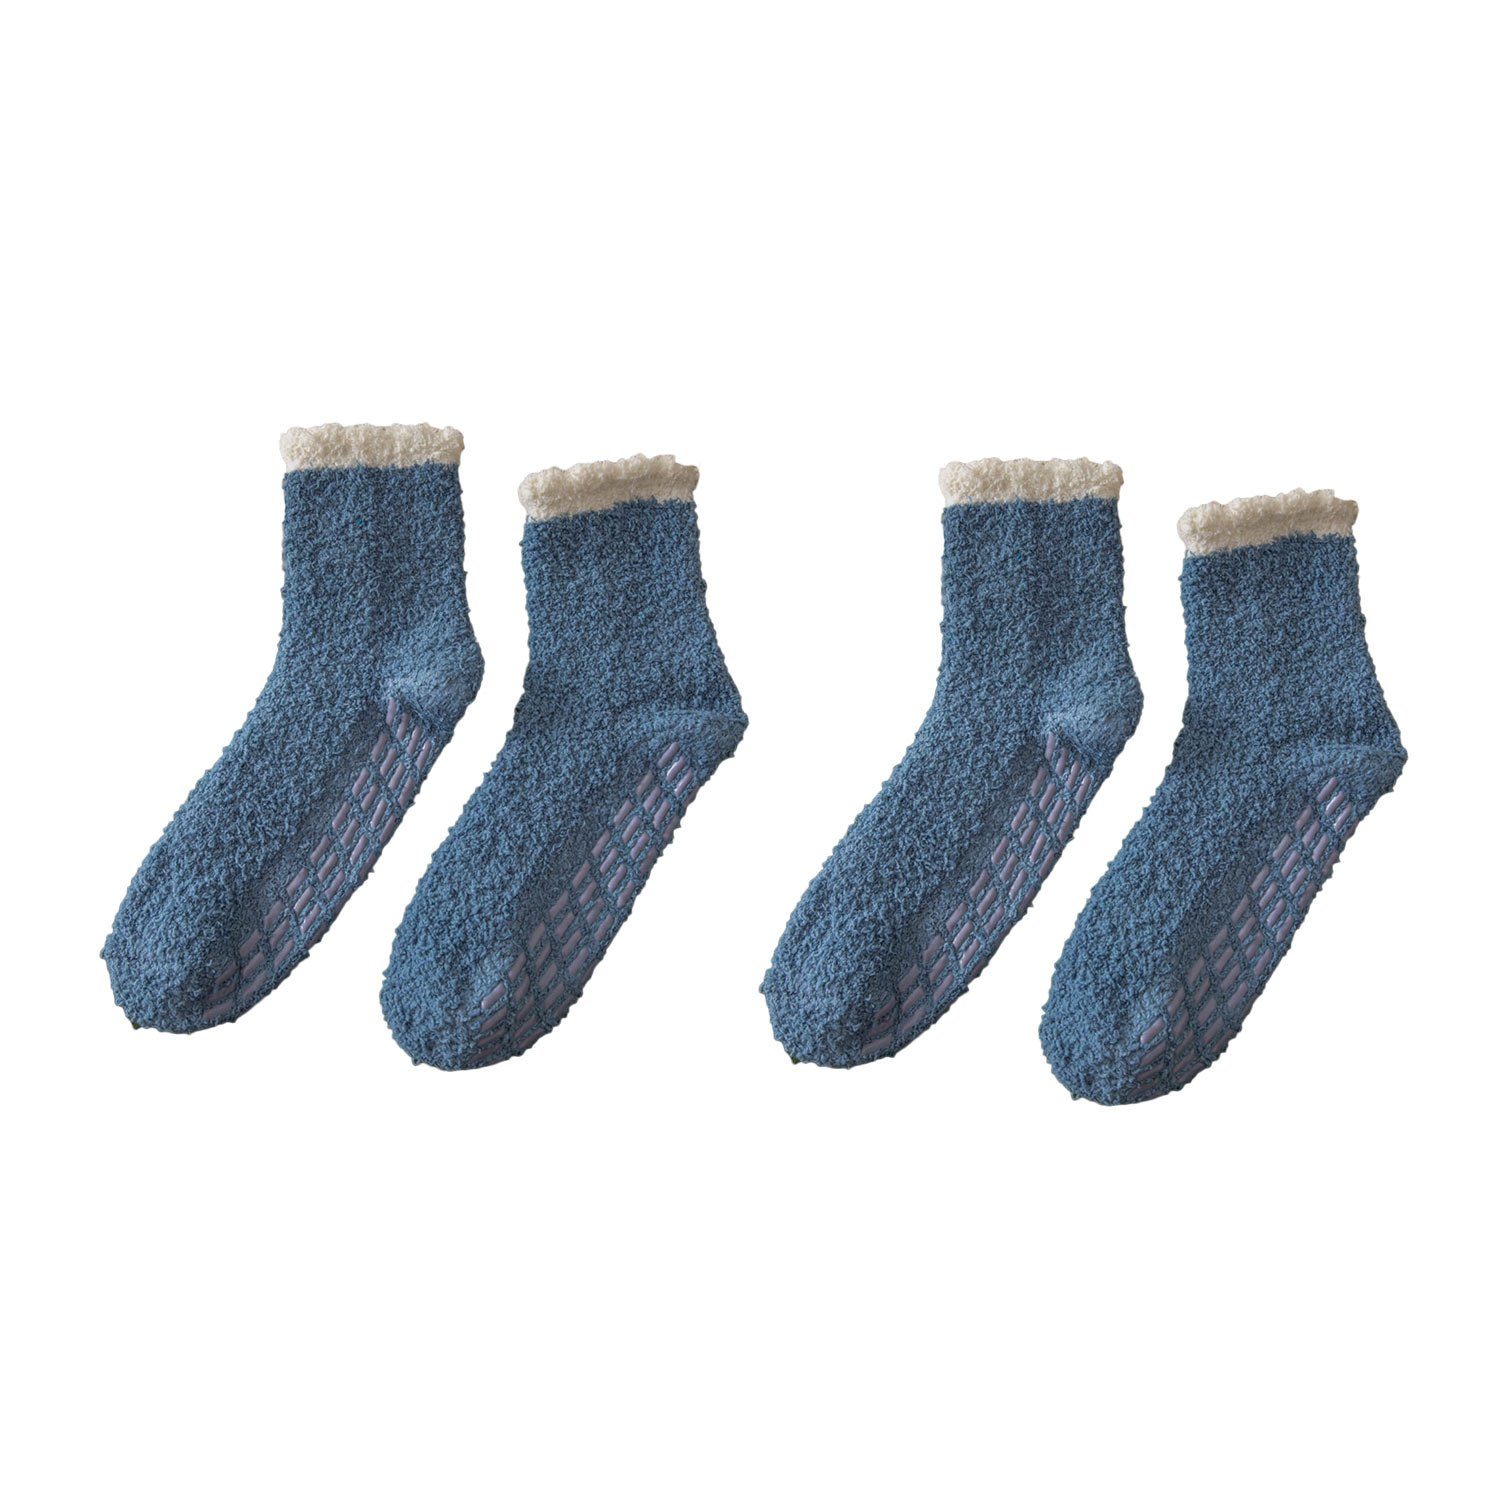 MAGICSHE Langsocken 2 Paare warme Fleece weiche Socken und Winter blau Rutschfeste für flauschige Socken